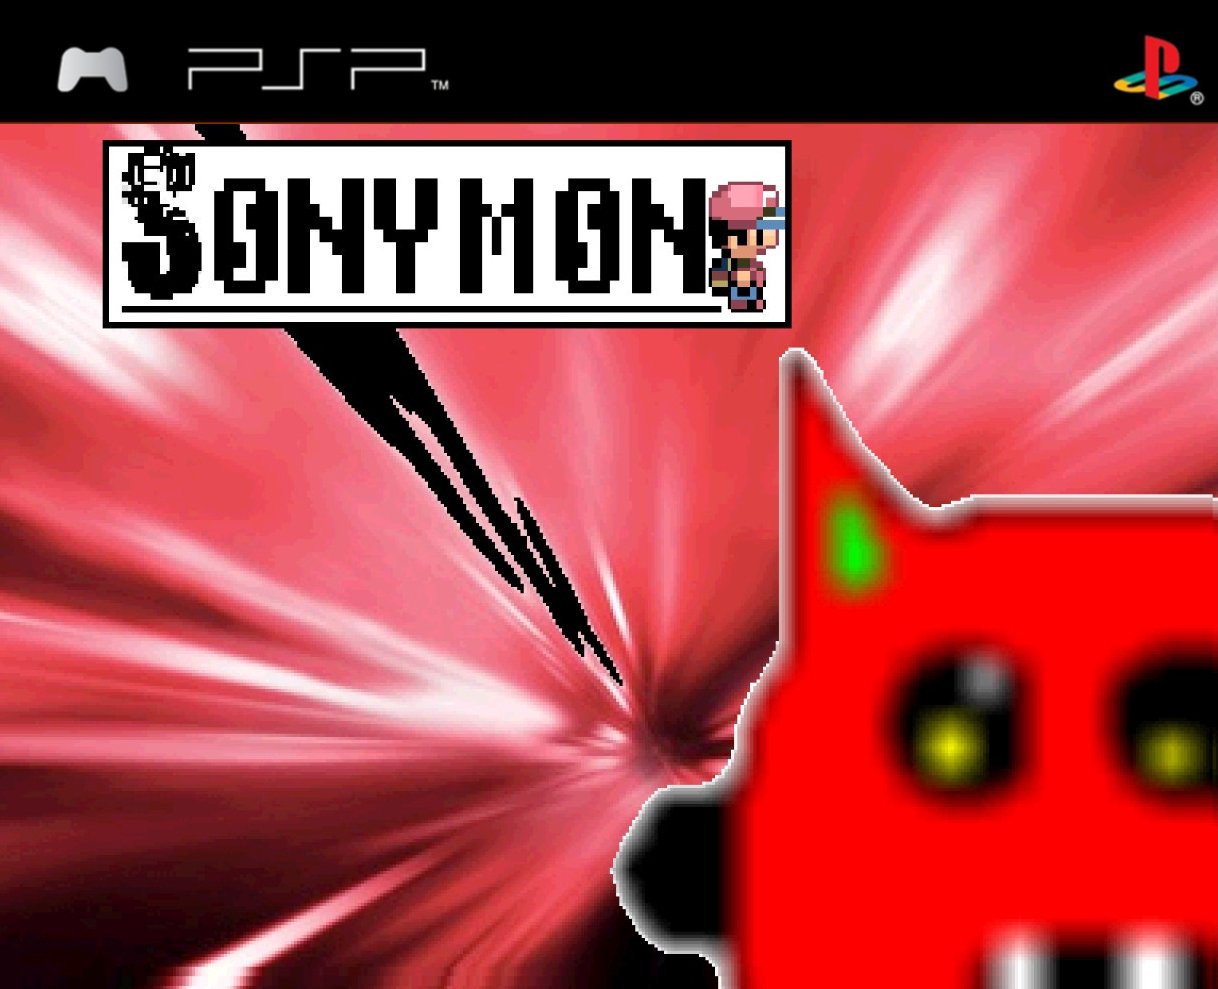 Sonymon